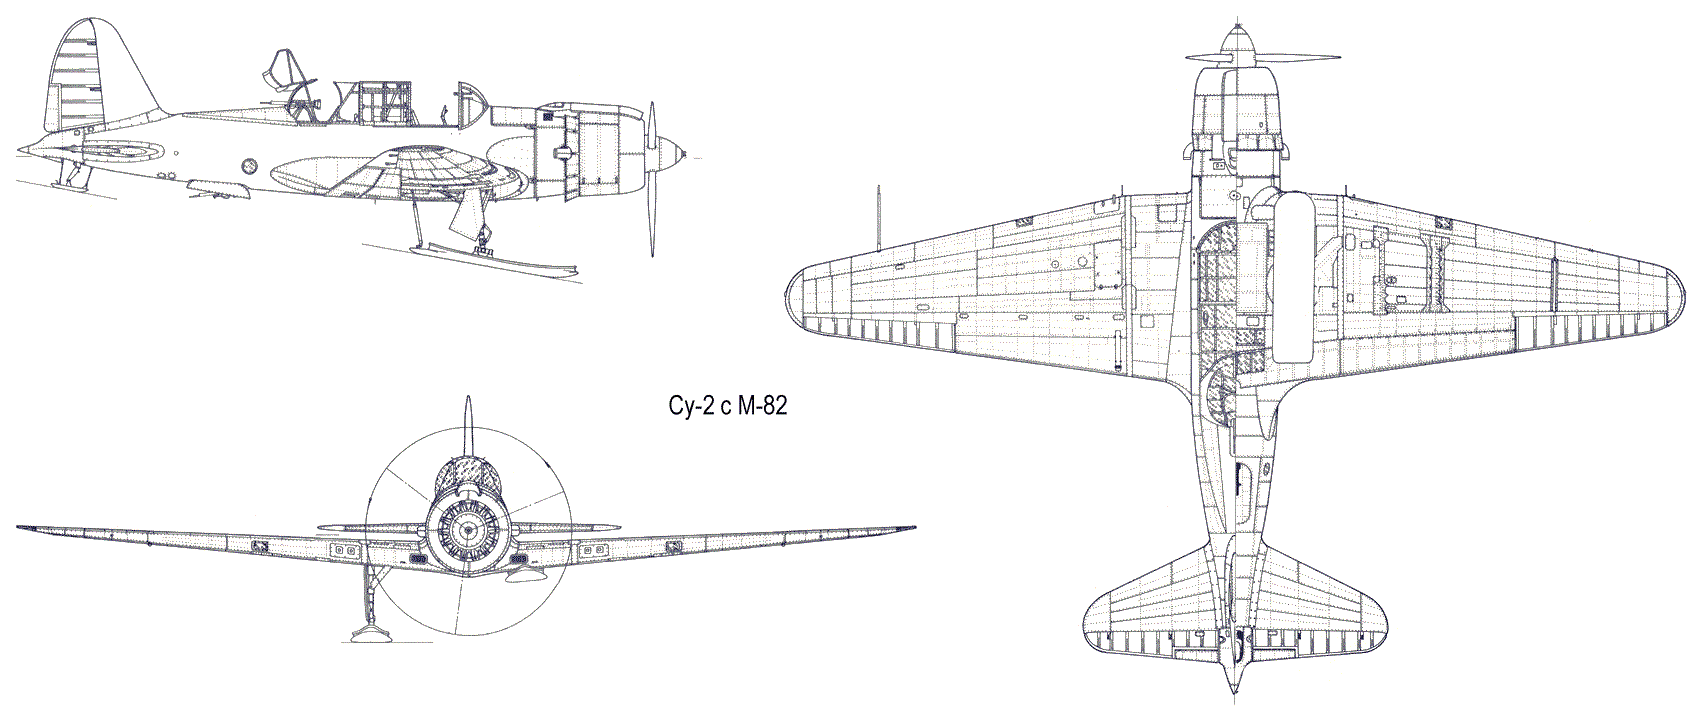 Су-2 (АНТ-51) — советский ближний бомбардировщик